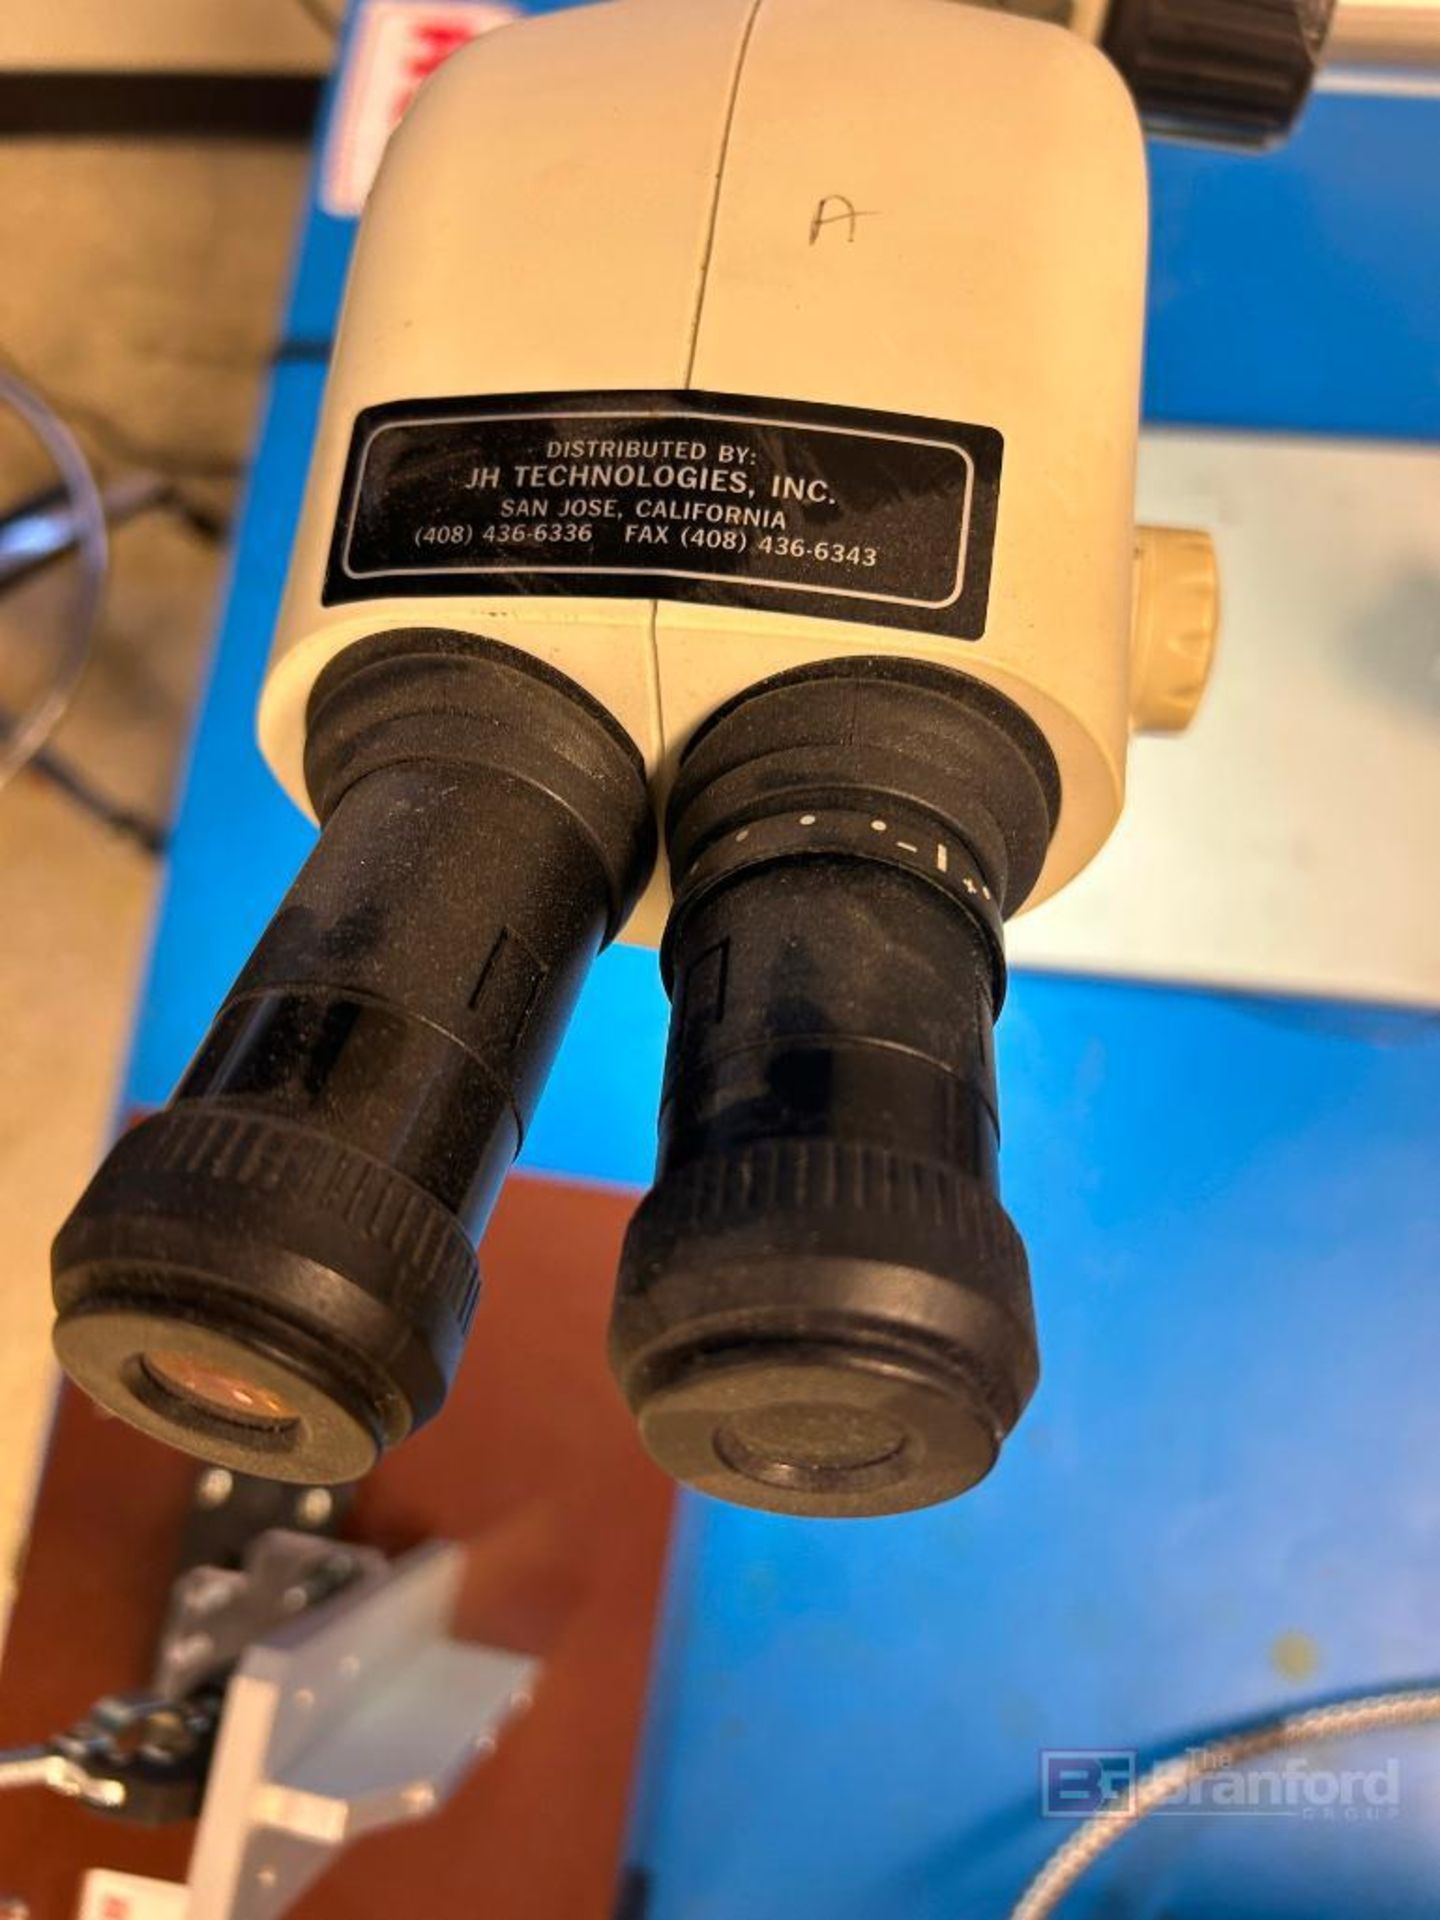 Leica S6E Stereozoom Microscope - Image 4 of 5